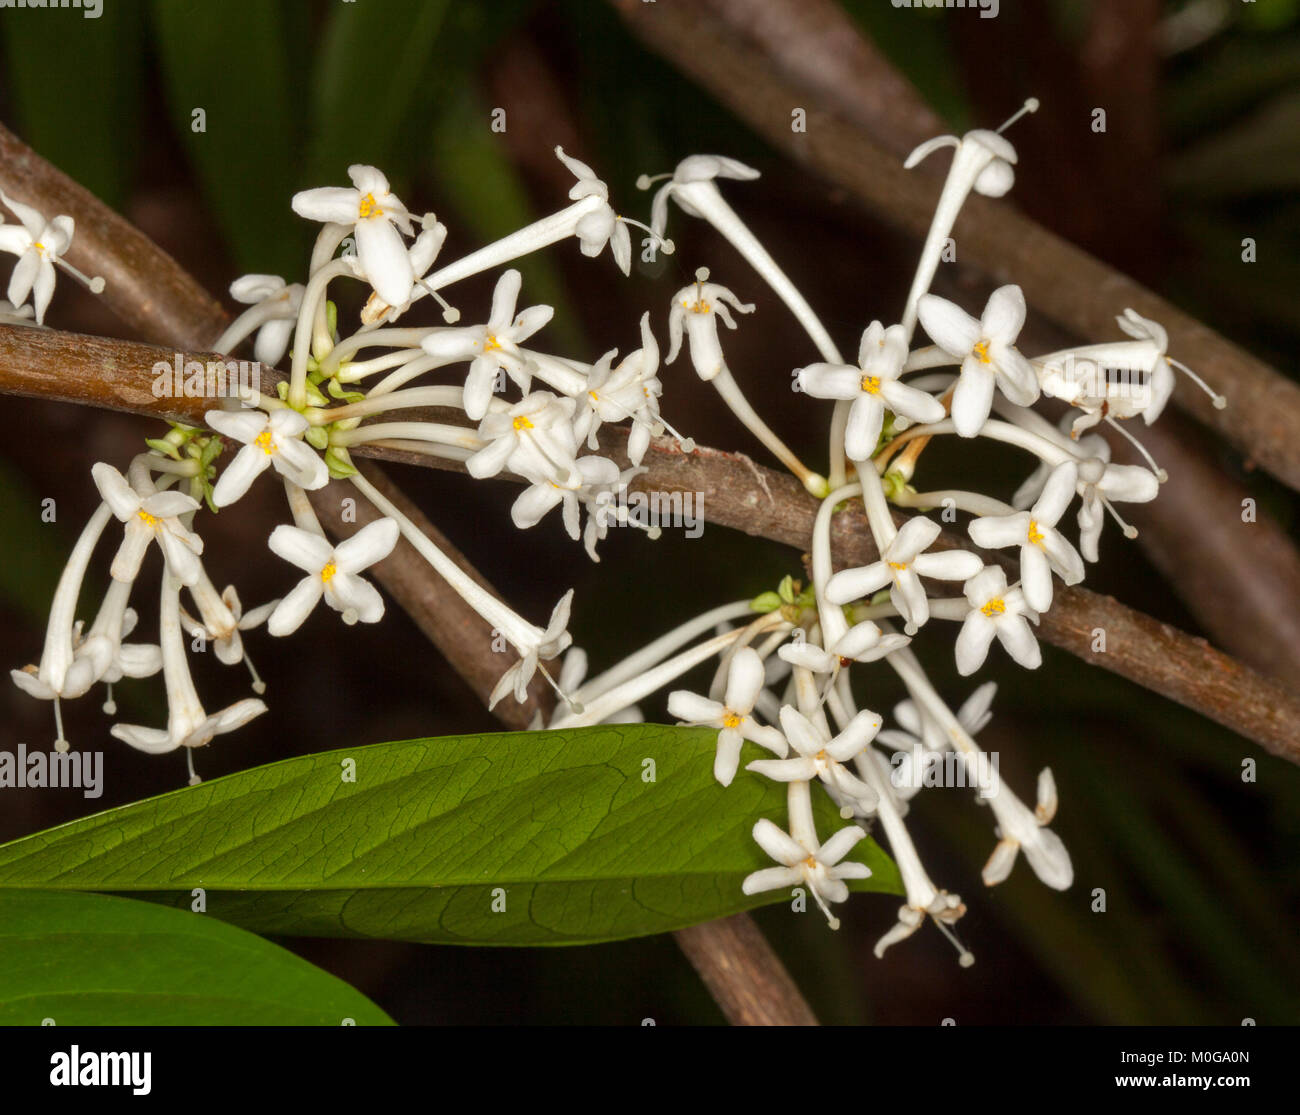 Cluster of white perfumed flowers of rare Australian native shrub / tree Phaleria clerodendron, scented daphne,on dark background Stock Photo